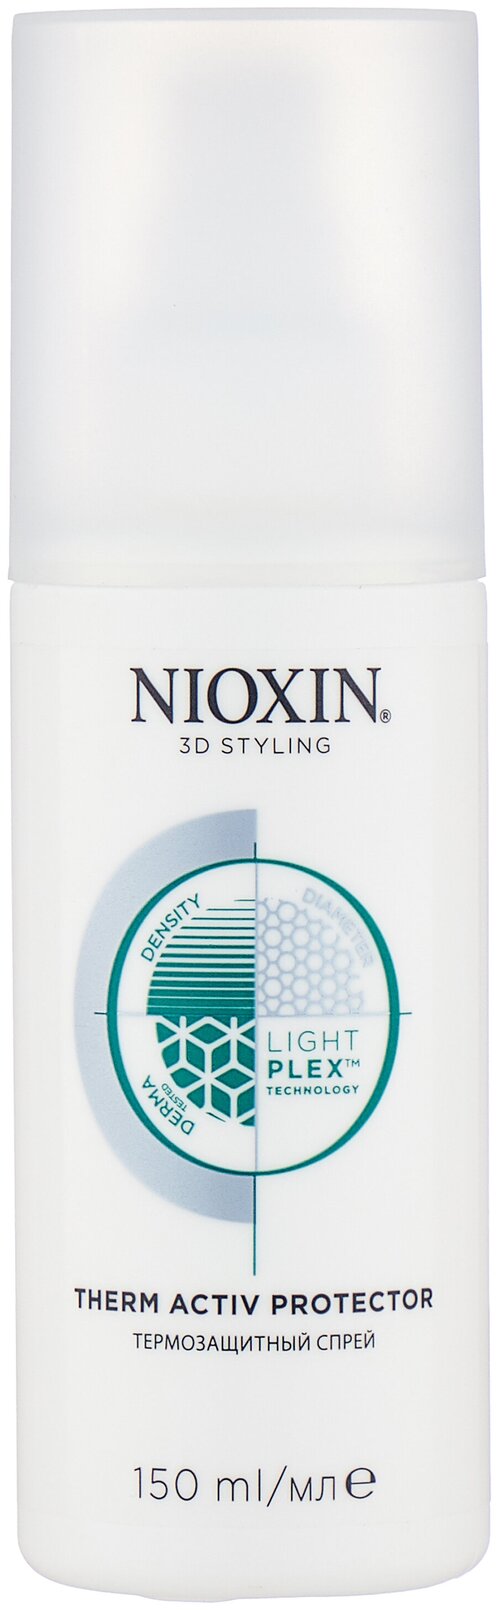 Nioxin Спрей для укладки ThermActiv protector, 180 г, 150 мл